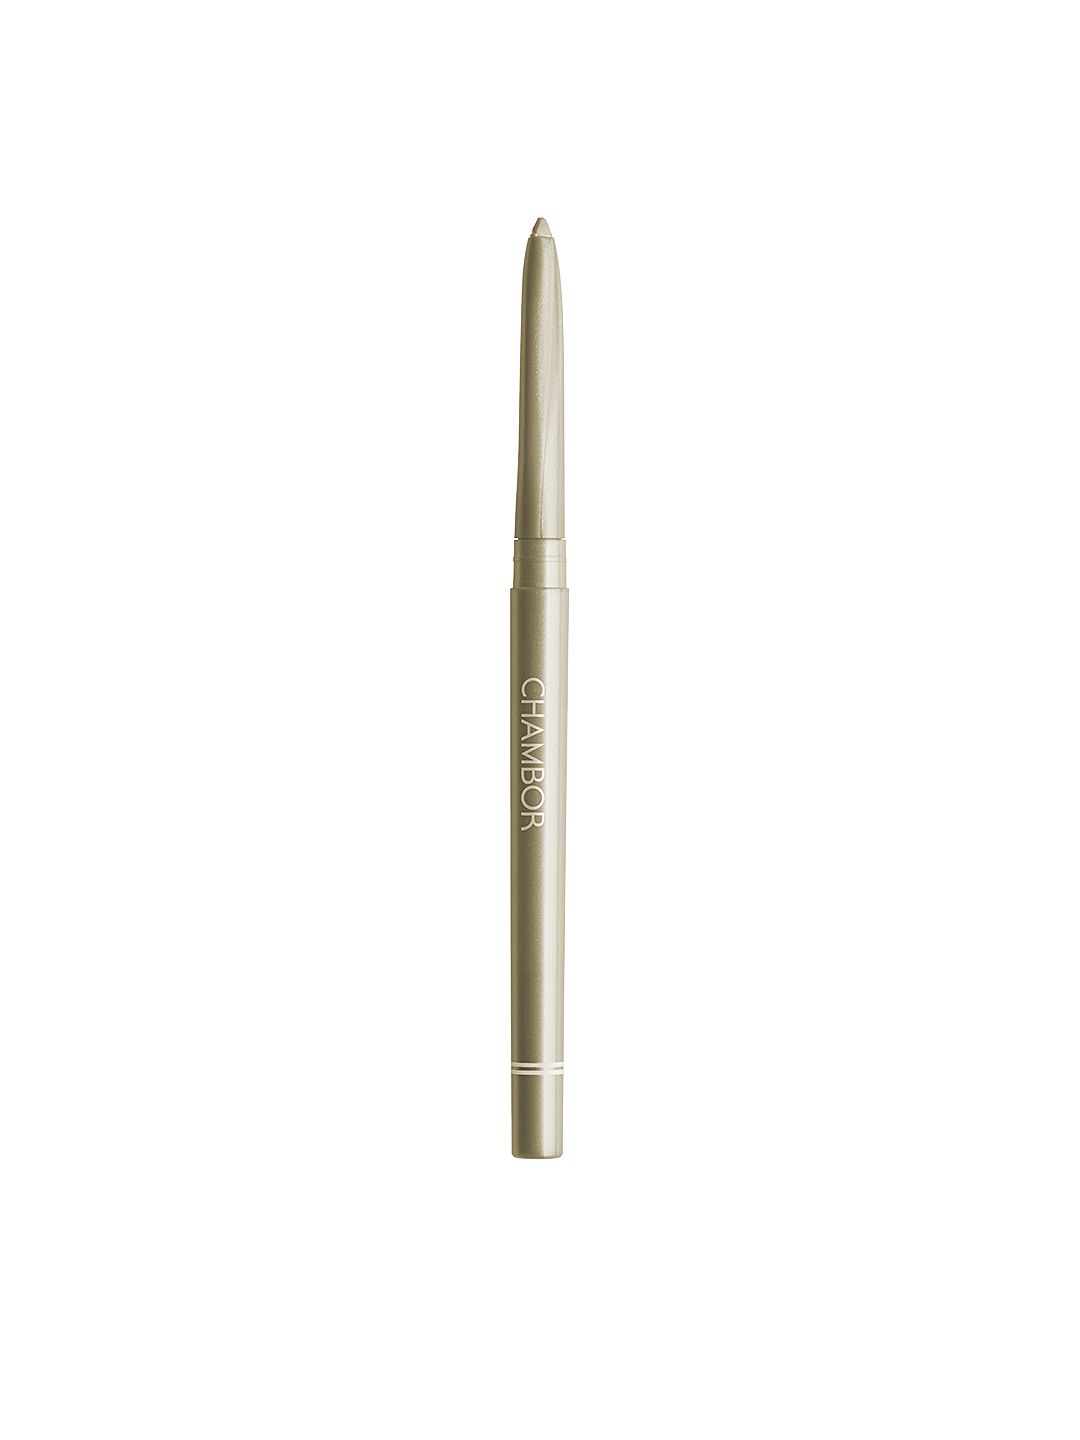 Chambor Intense Definition Light Almond Gel Eyeliner Pencil 108 Price in India